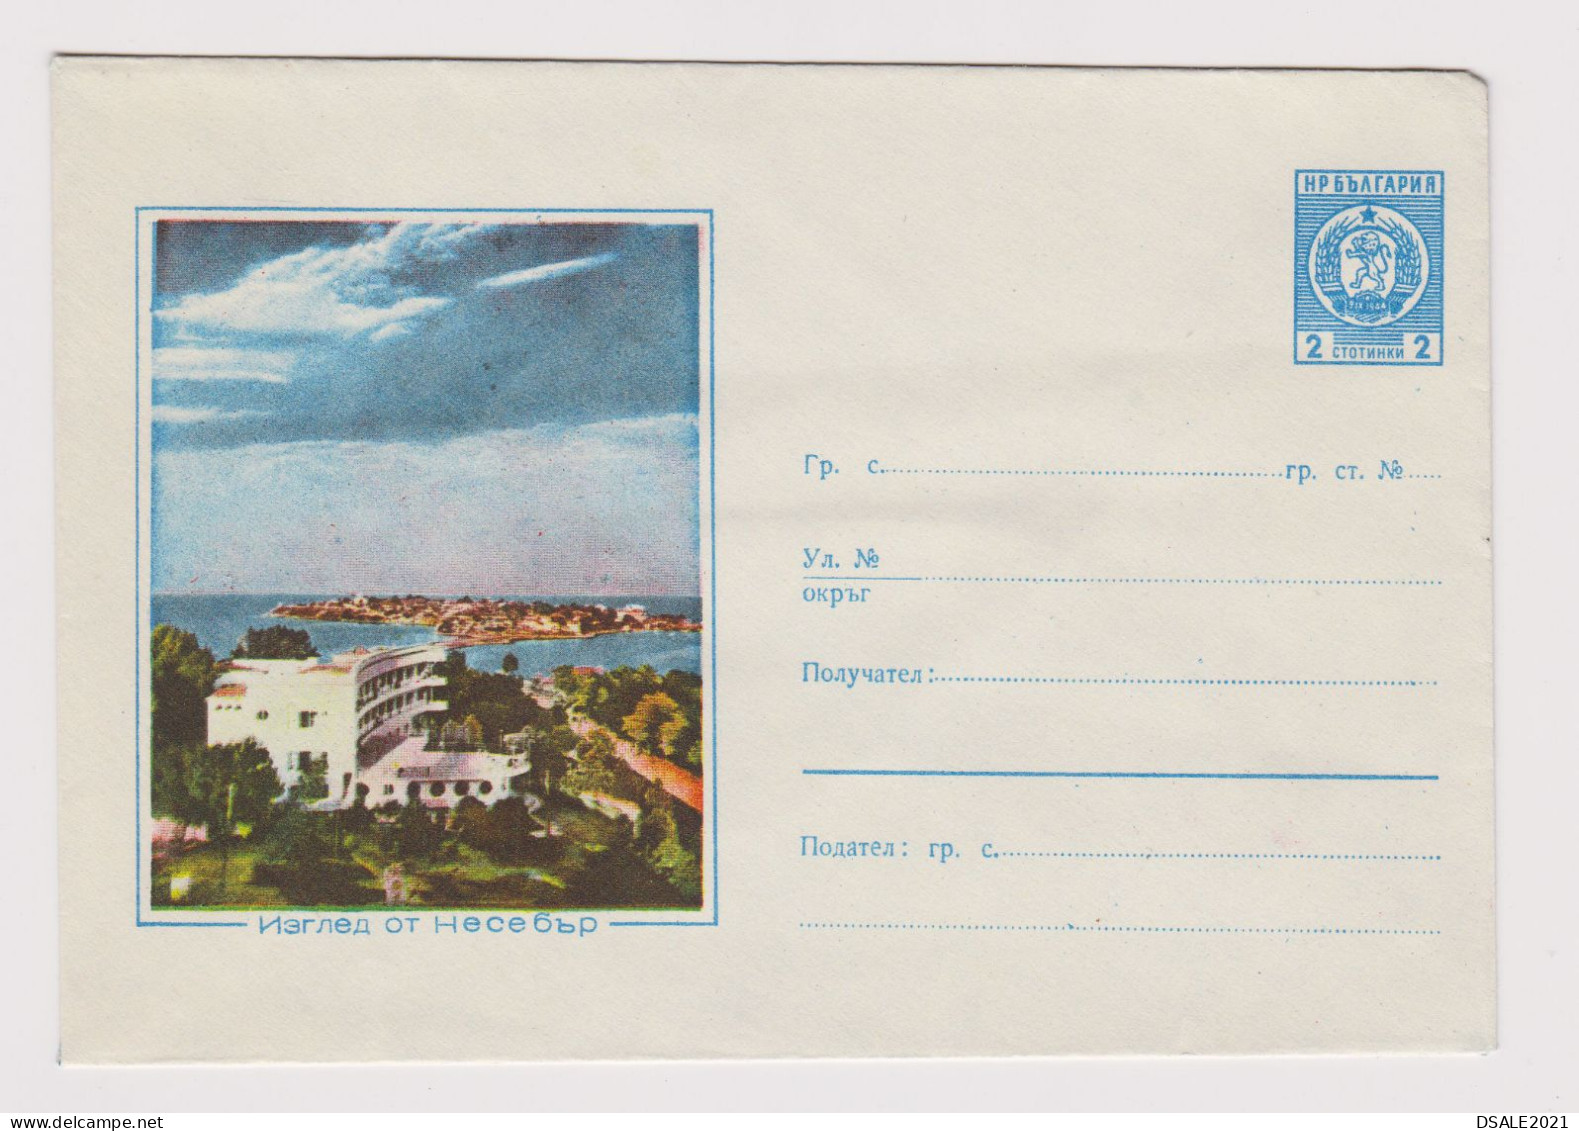 Bulgaria Bulgarien Bulgarie 1962 Bulgarian Postal Stationery Cover PSE, Entier, Unused, NESEBAR (55820) - Covers